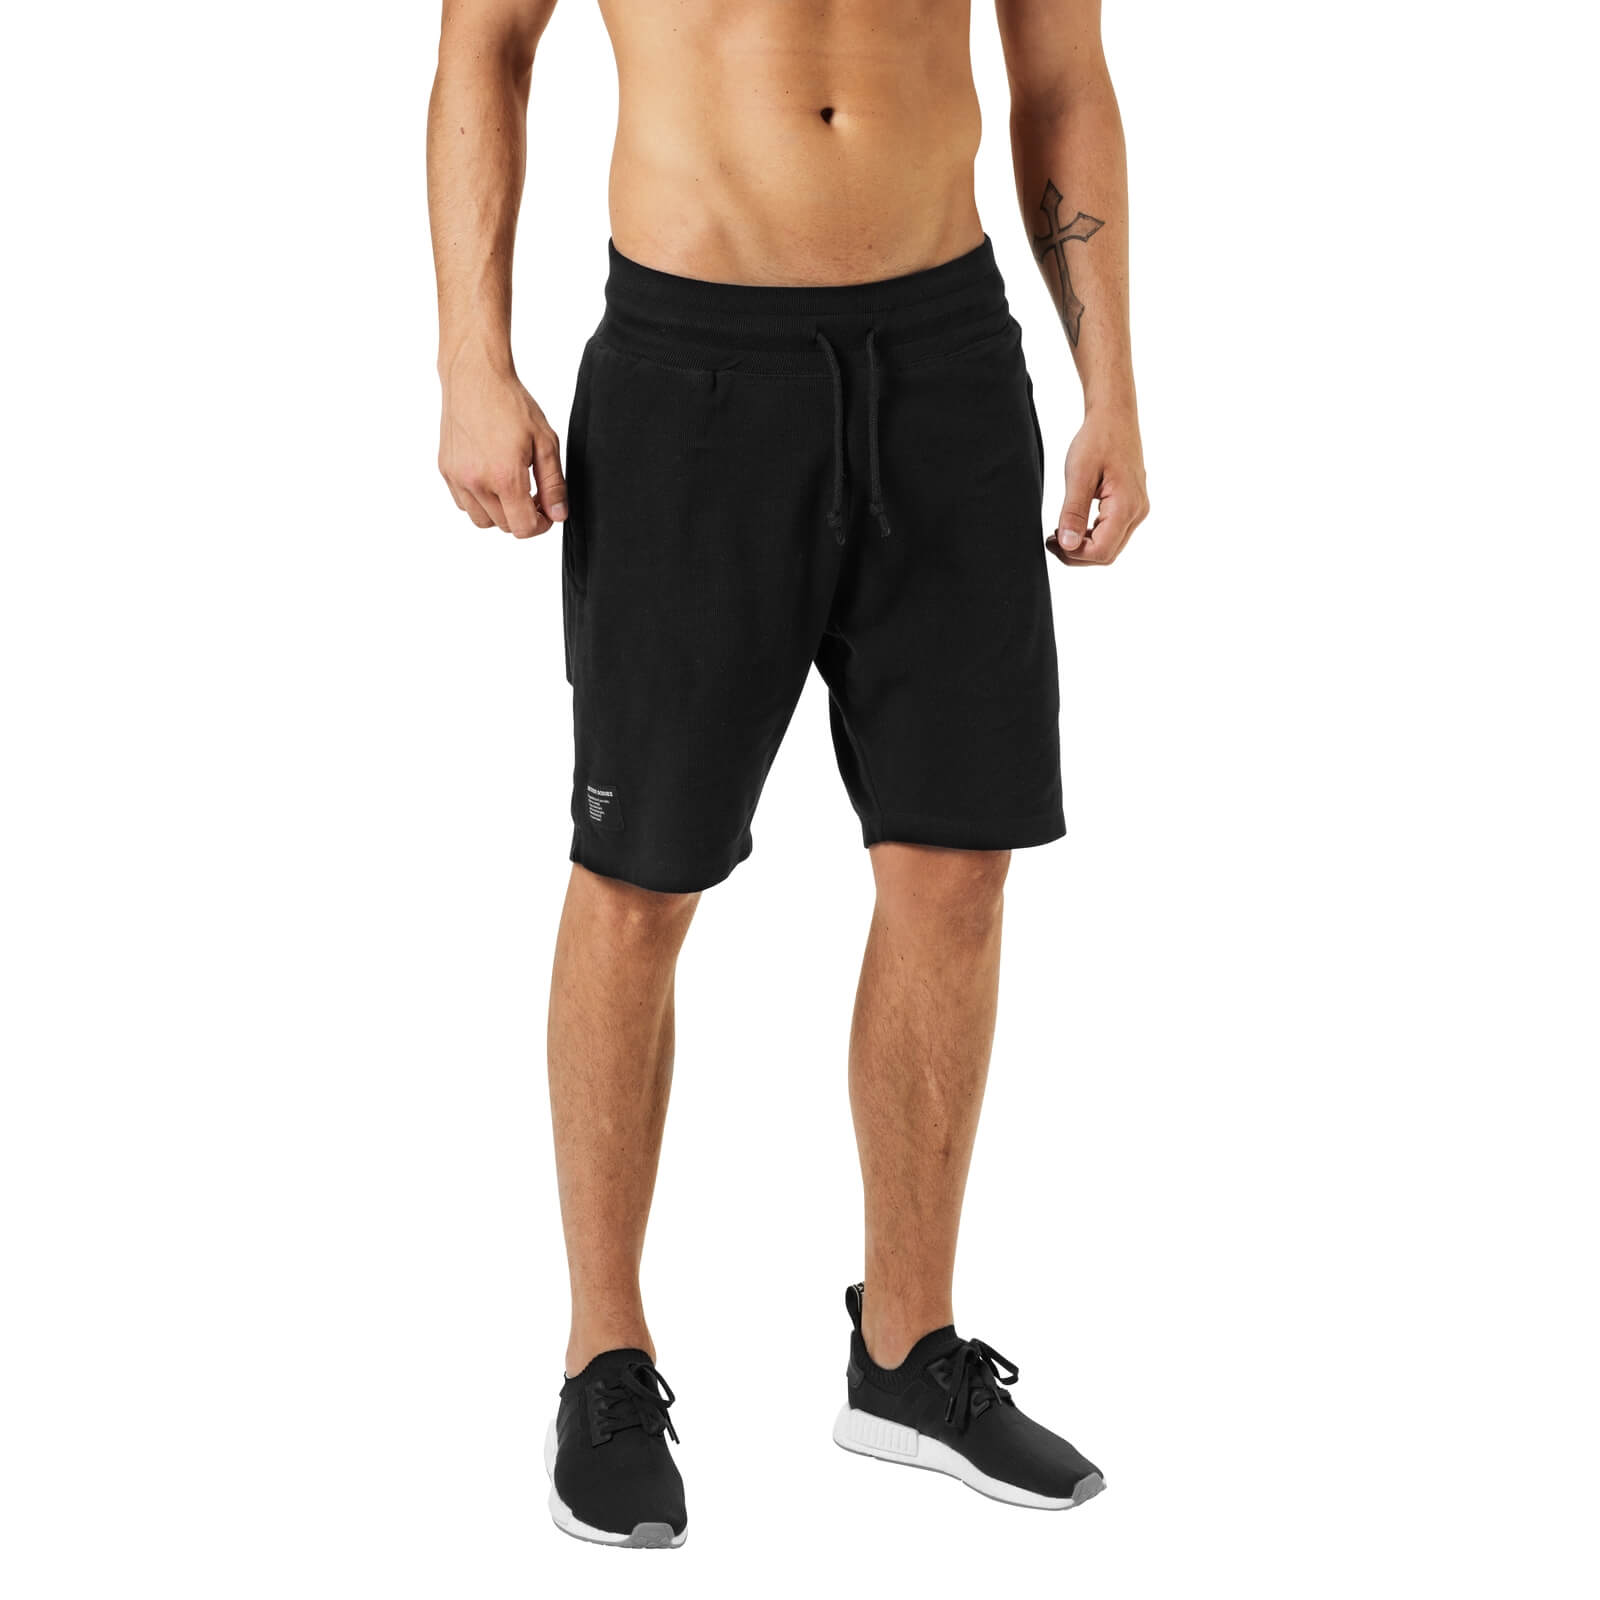 Kolla in Stanton Shorts, wash black, Better Bodies hos SportGymButiken.se